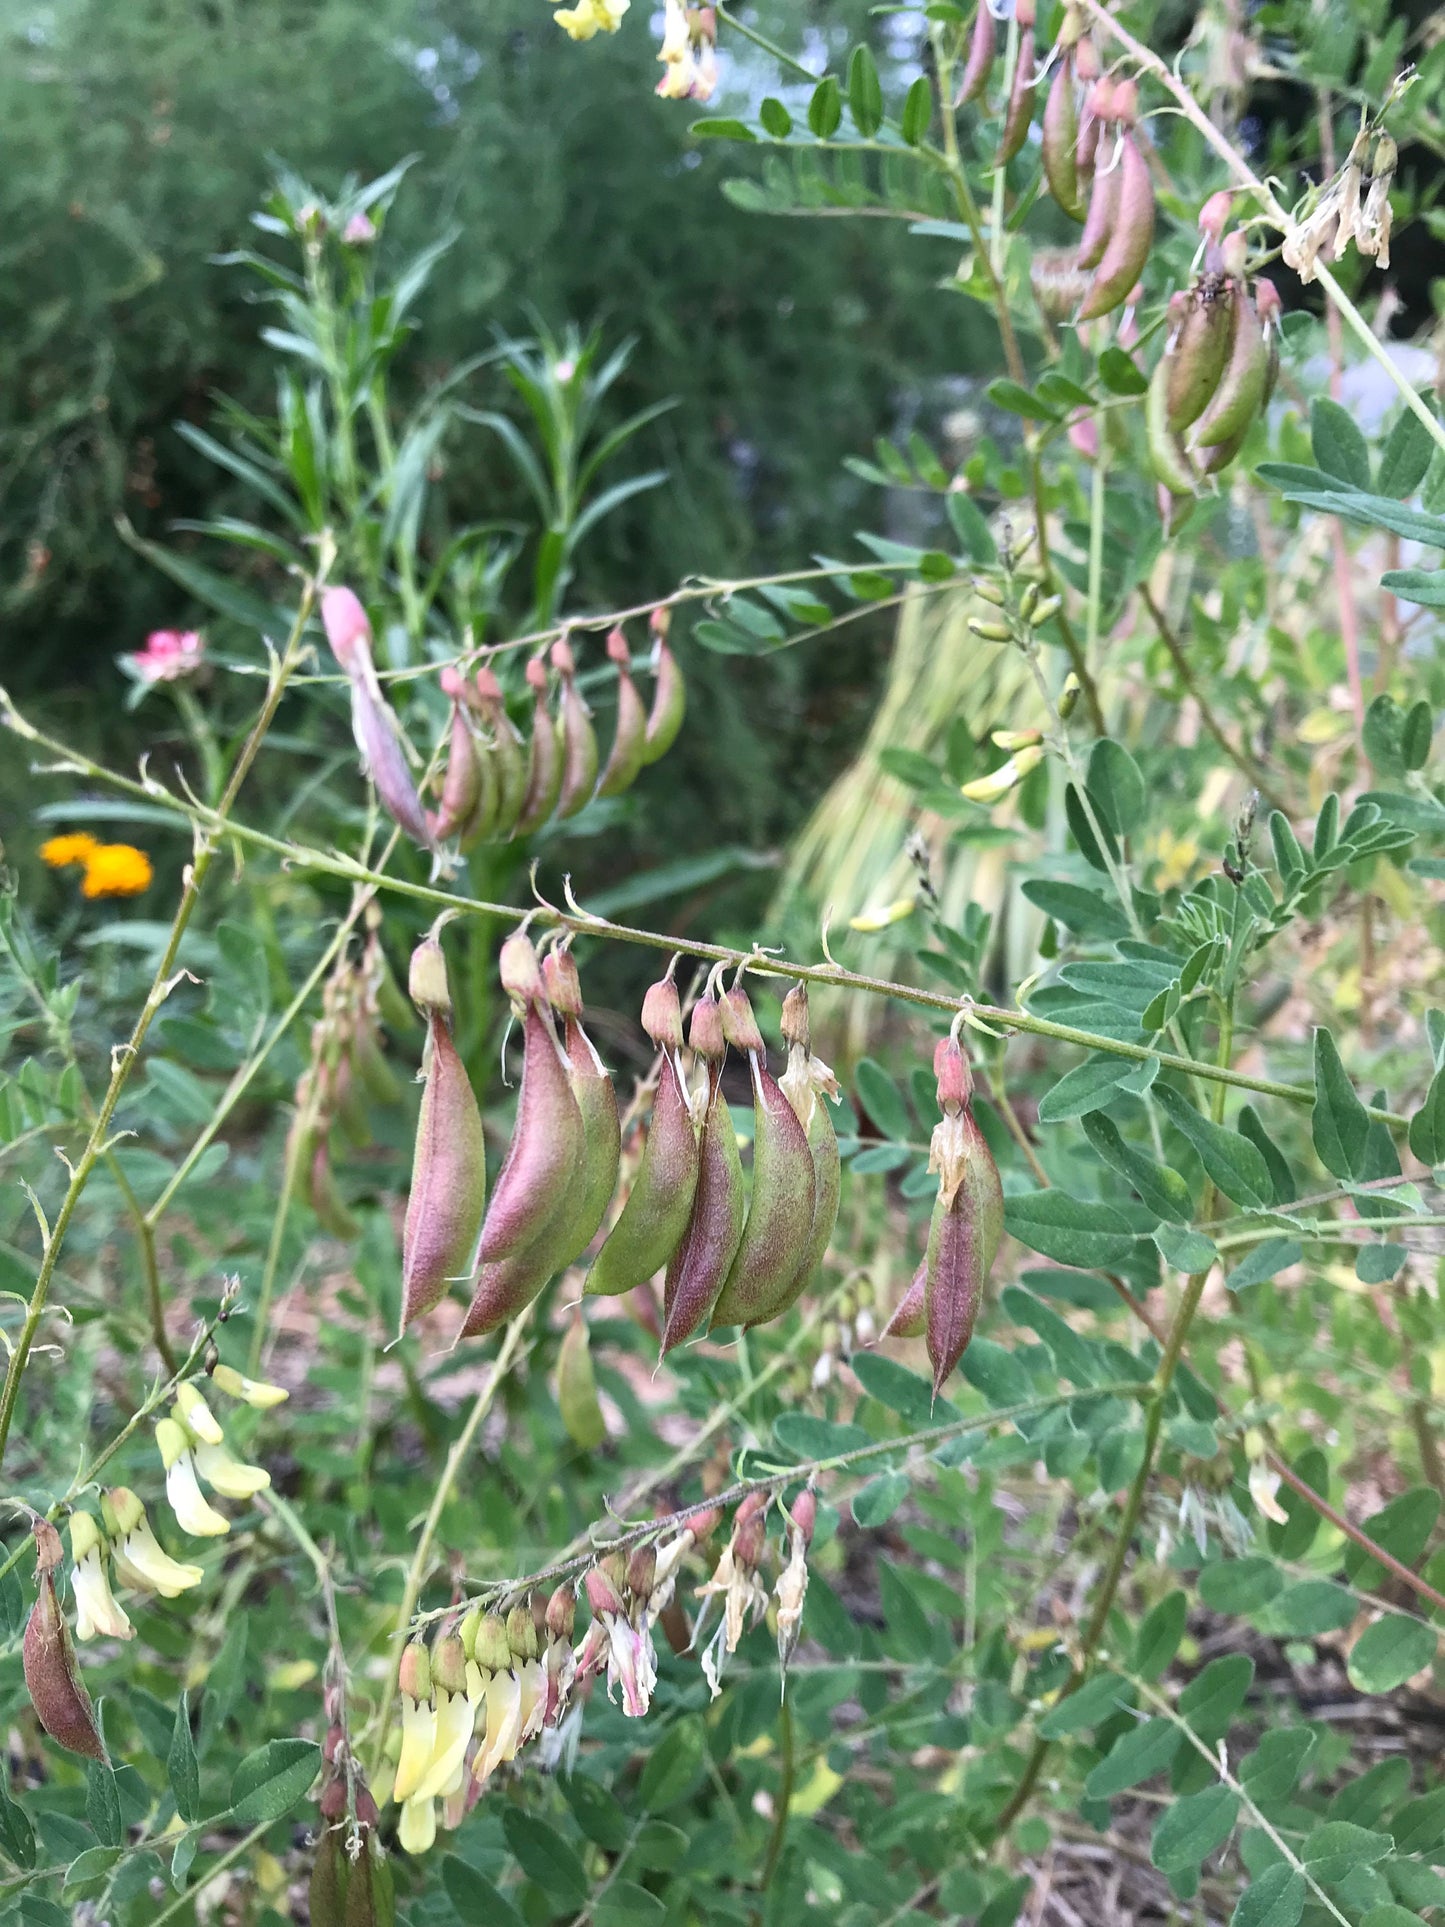 Astragalus Seeds- Astragalus membranaceus - Huang-qi / Huang qi